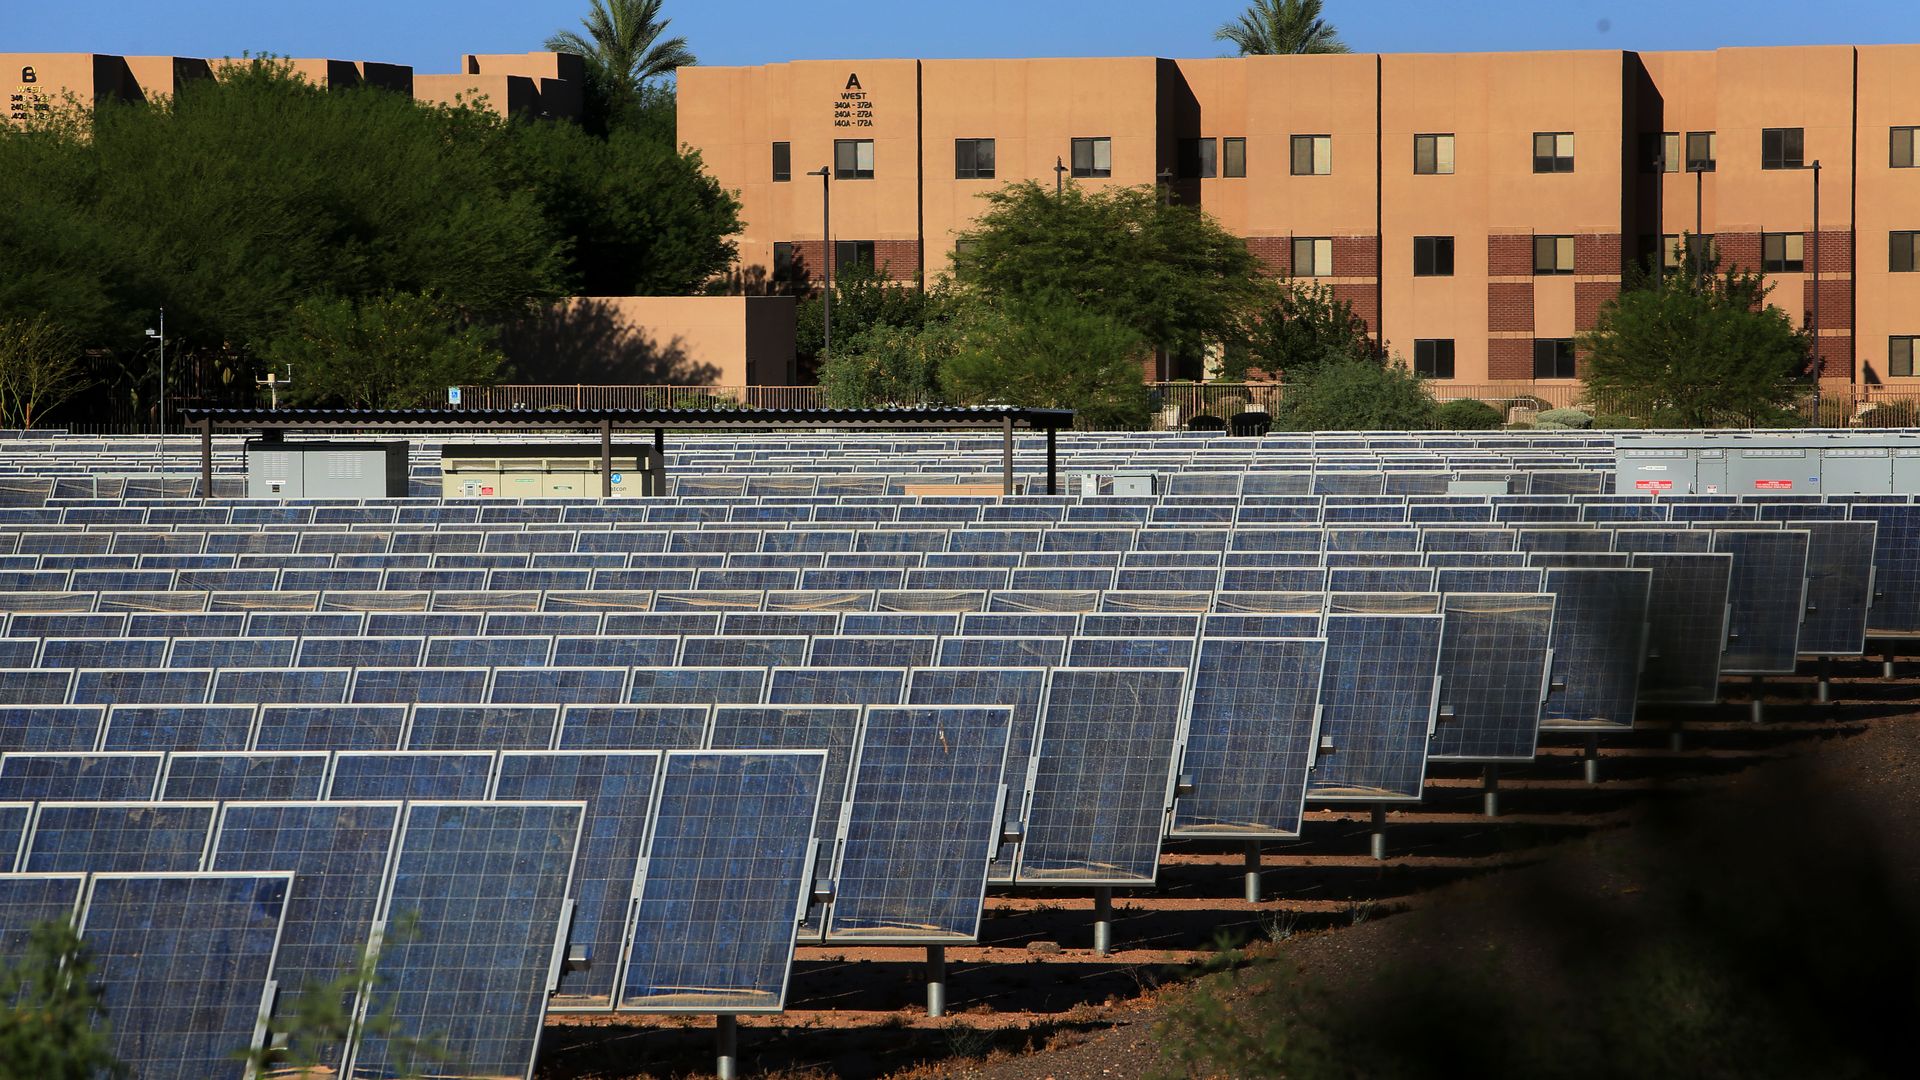 A solar farm system on the campus of Arizone State University in Phoenix, AZ on Thursday, June 20, 2013.